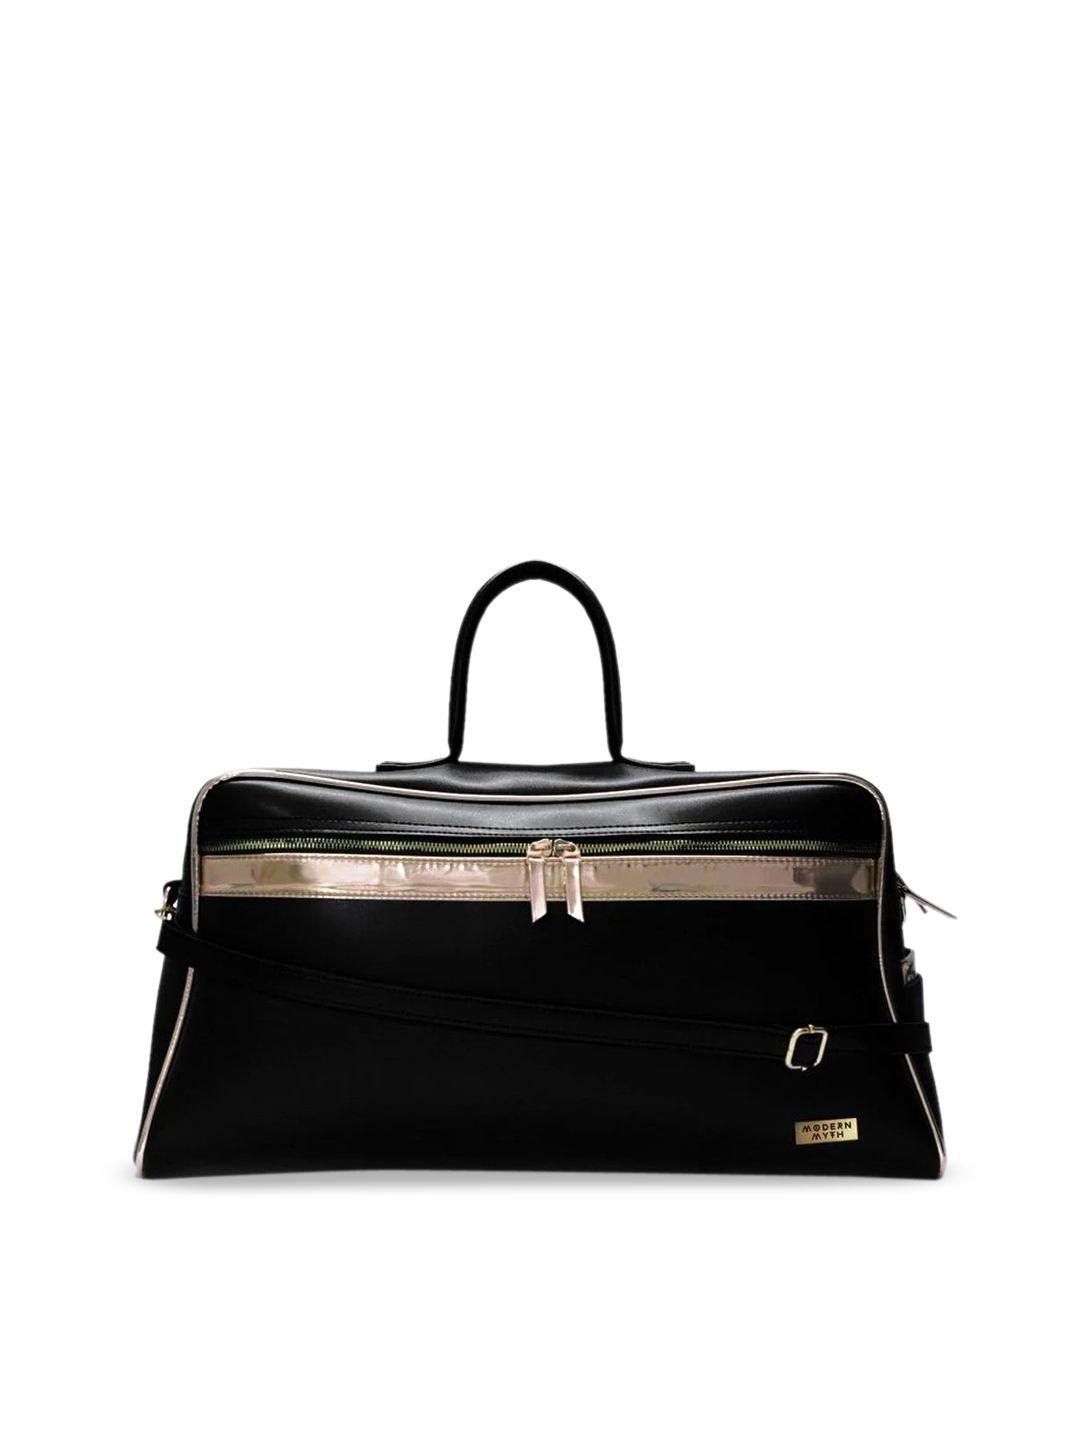 modern myth black & rose gold-toned medium duffel bag